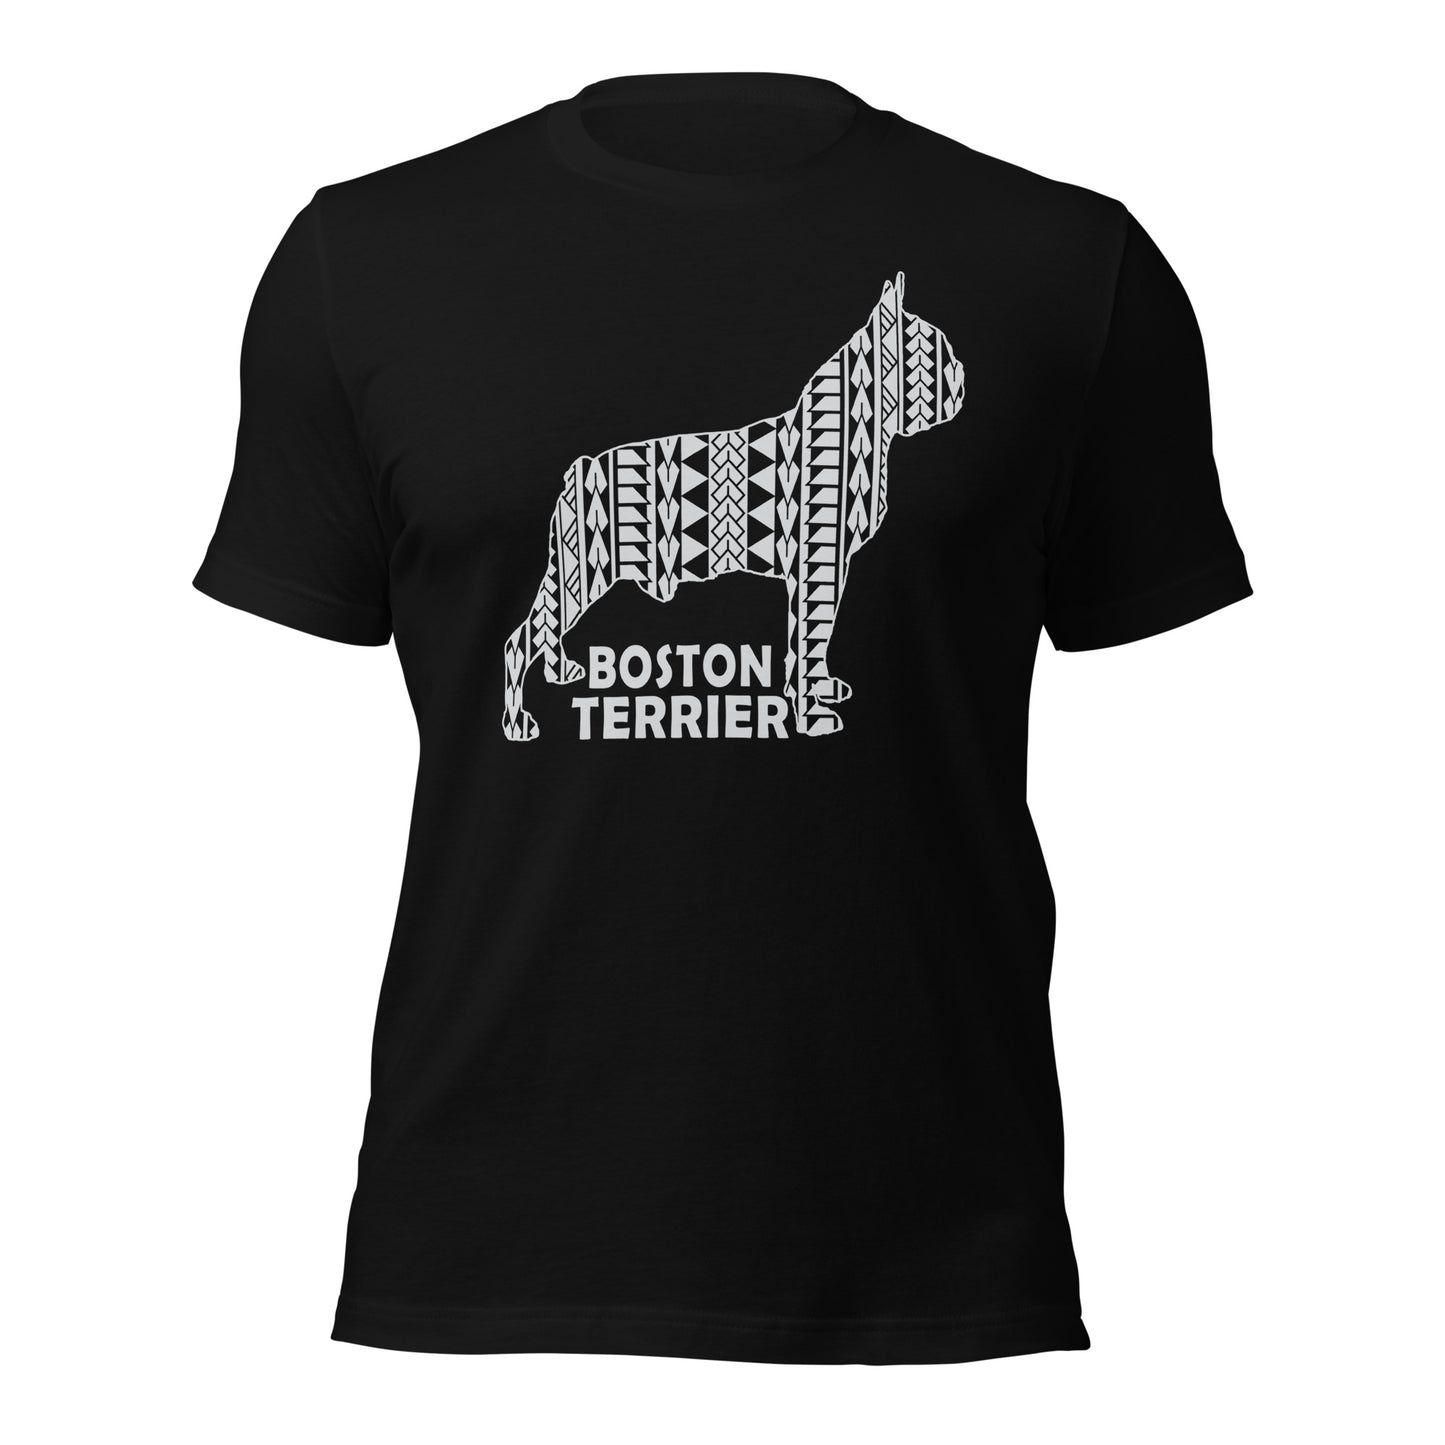 Boston Terrier Polynesian t-shirt black by Dog Artistry.